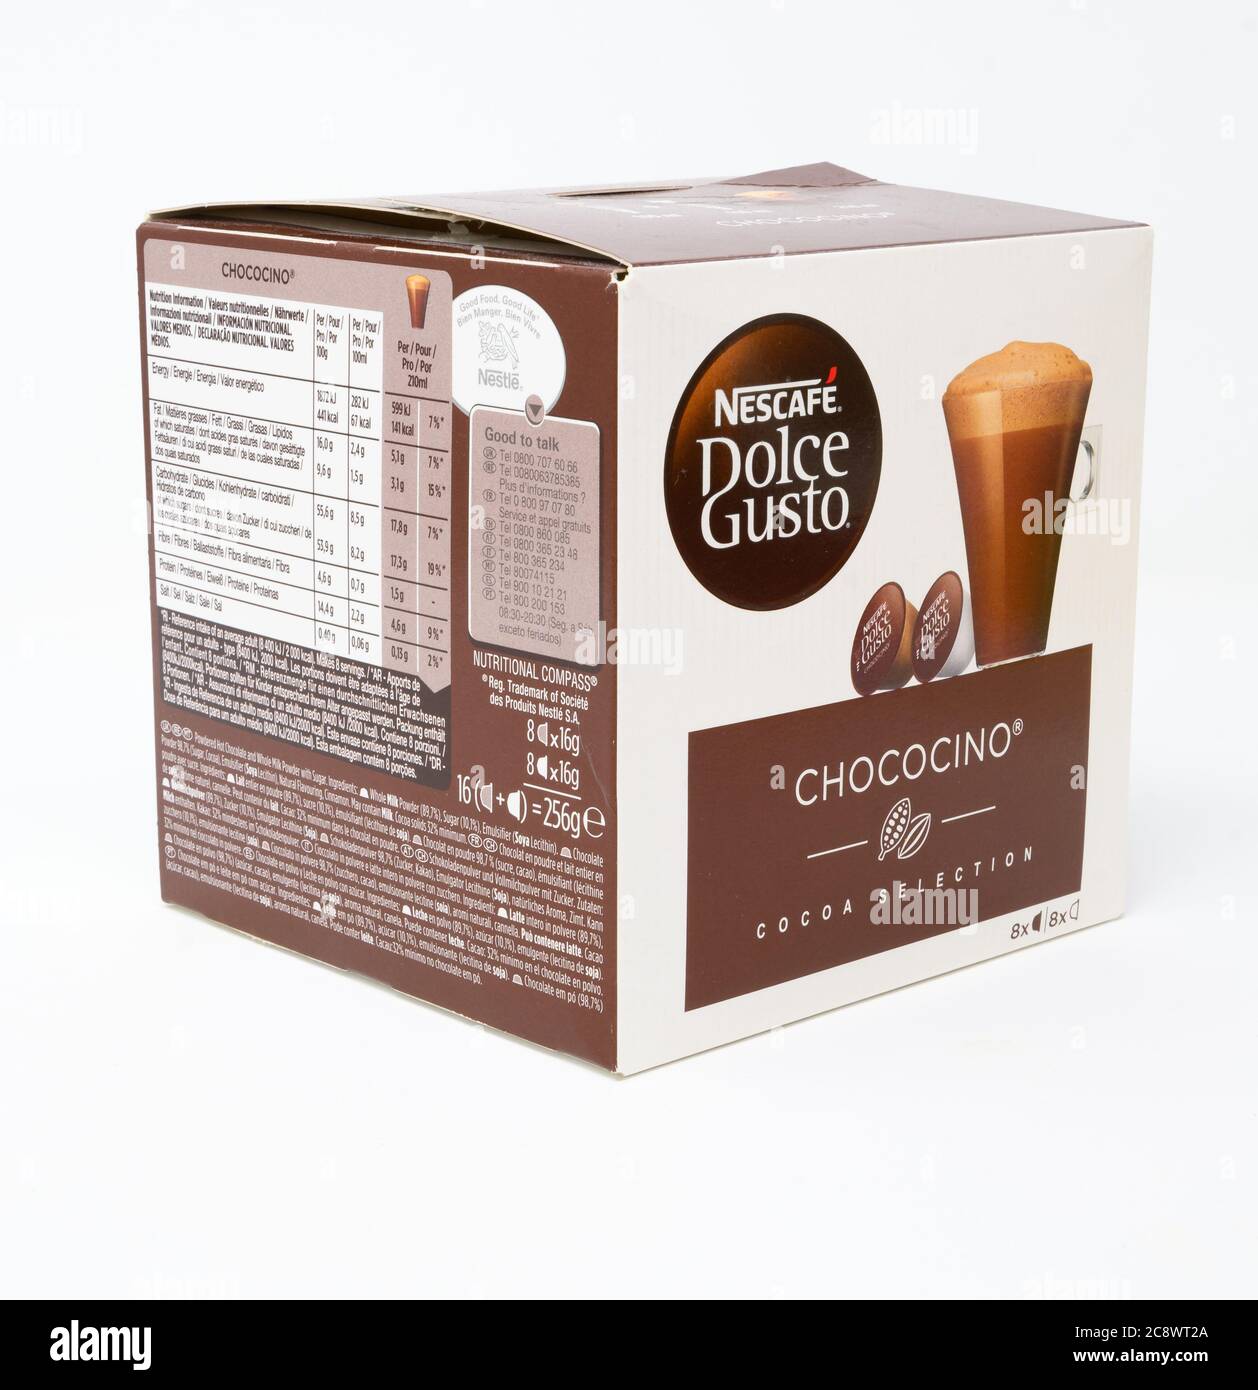 Reading, United Kingdom - July 13 2020: A box of Nescafe Dolce